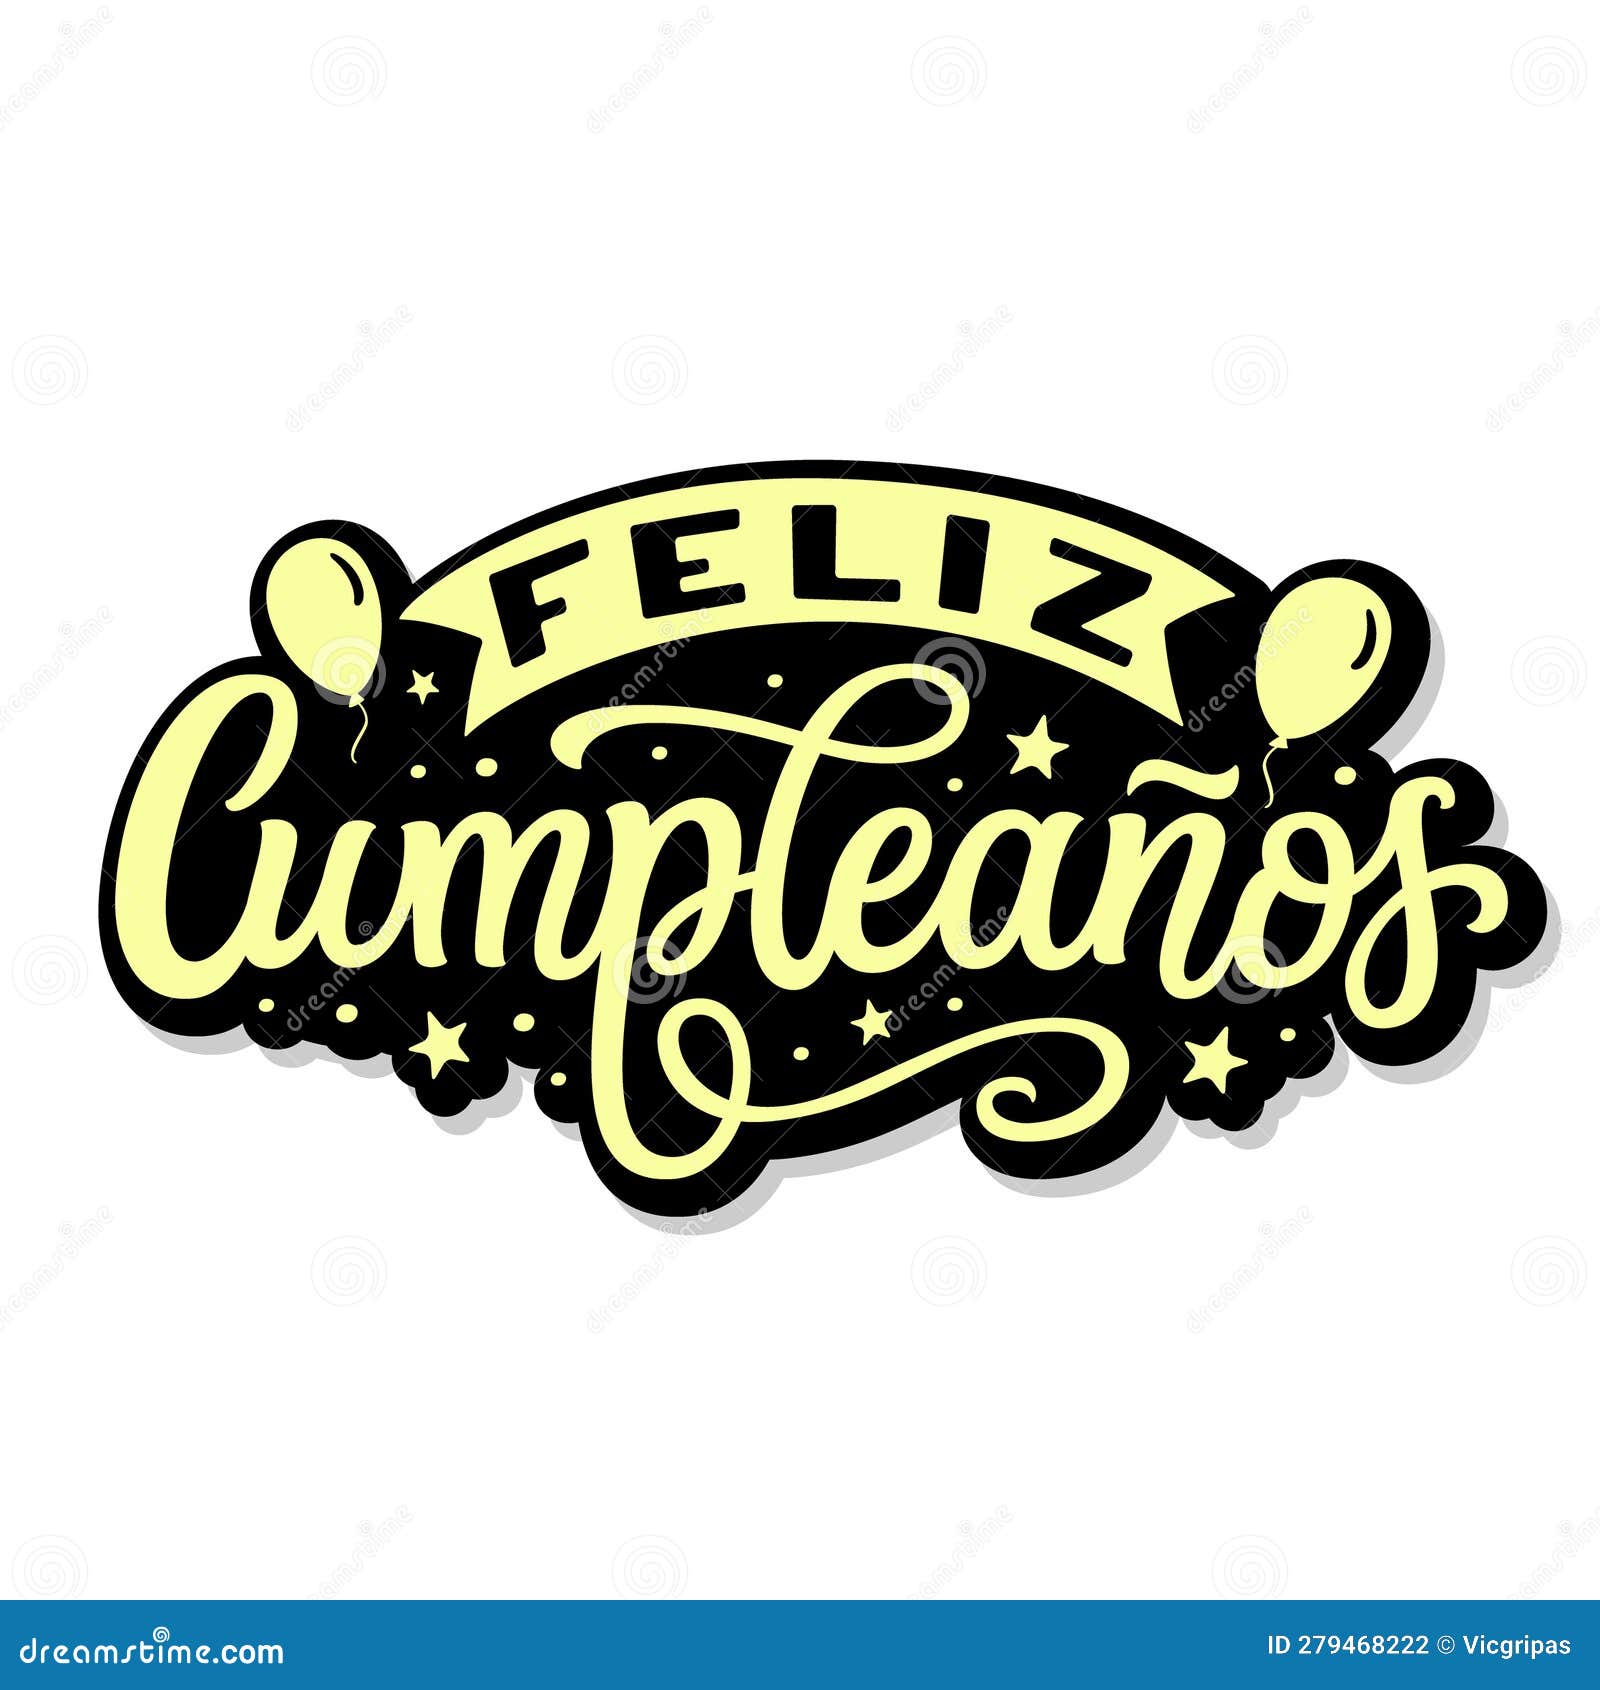 Feliz cumpleaños. Vector decorative greeting card. Happy birthday in  spanish. Stock Vector